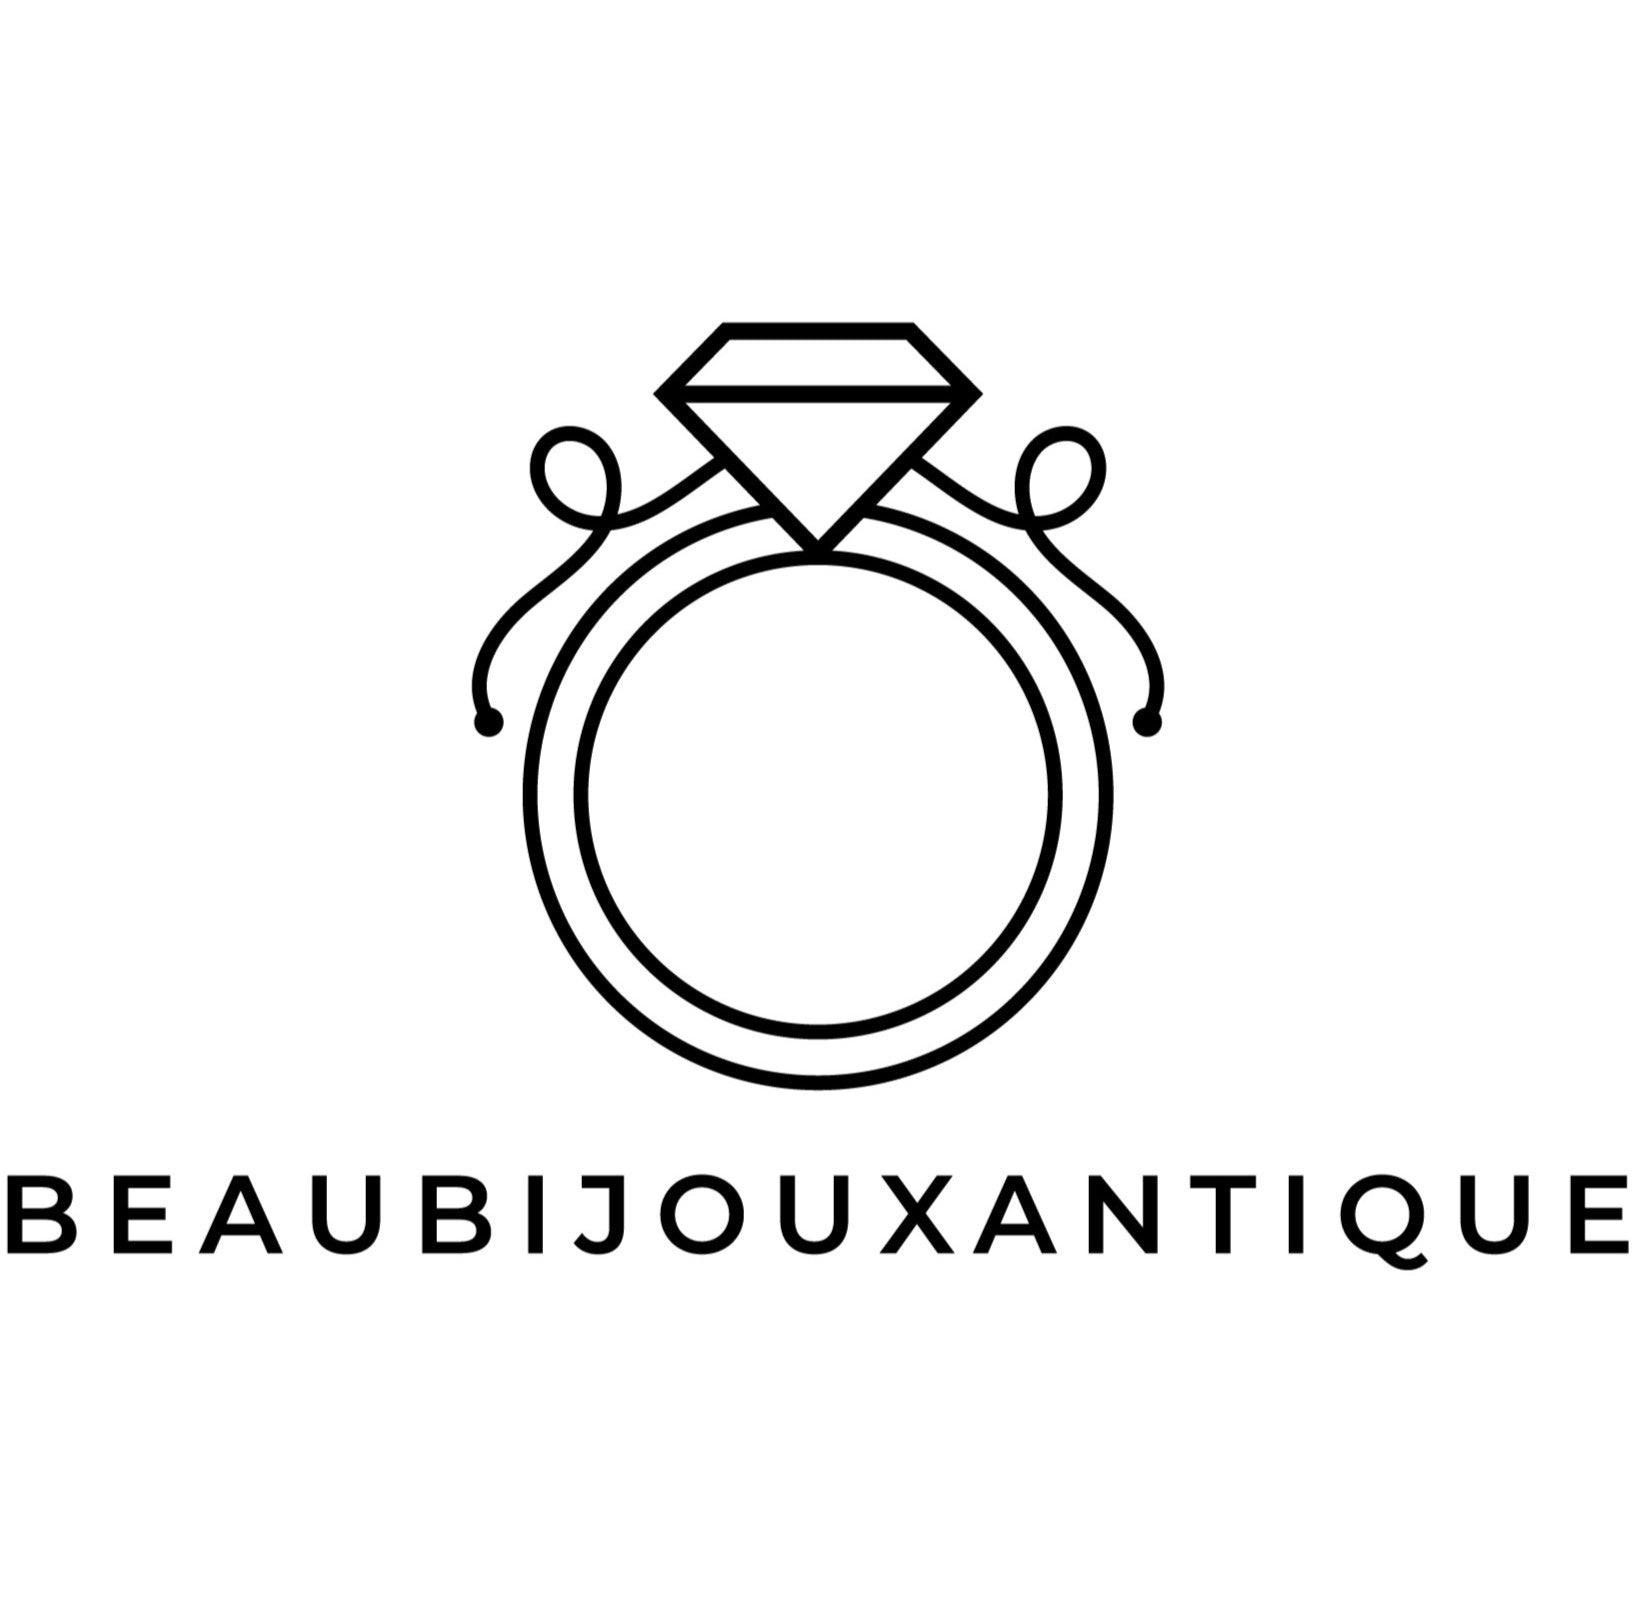 Beaubijouxantique